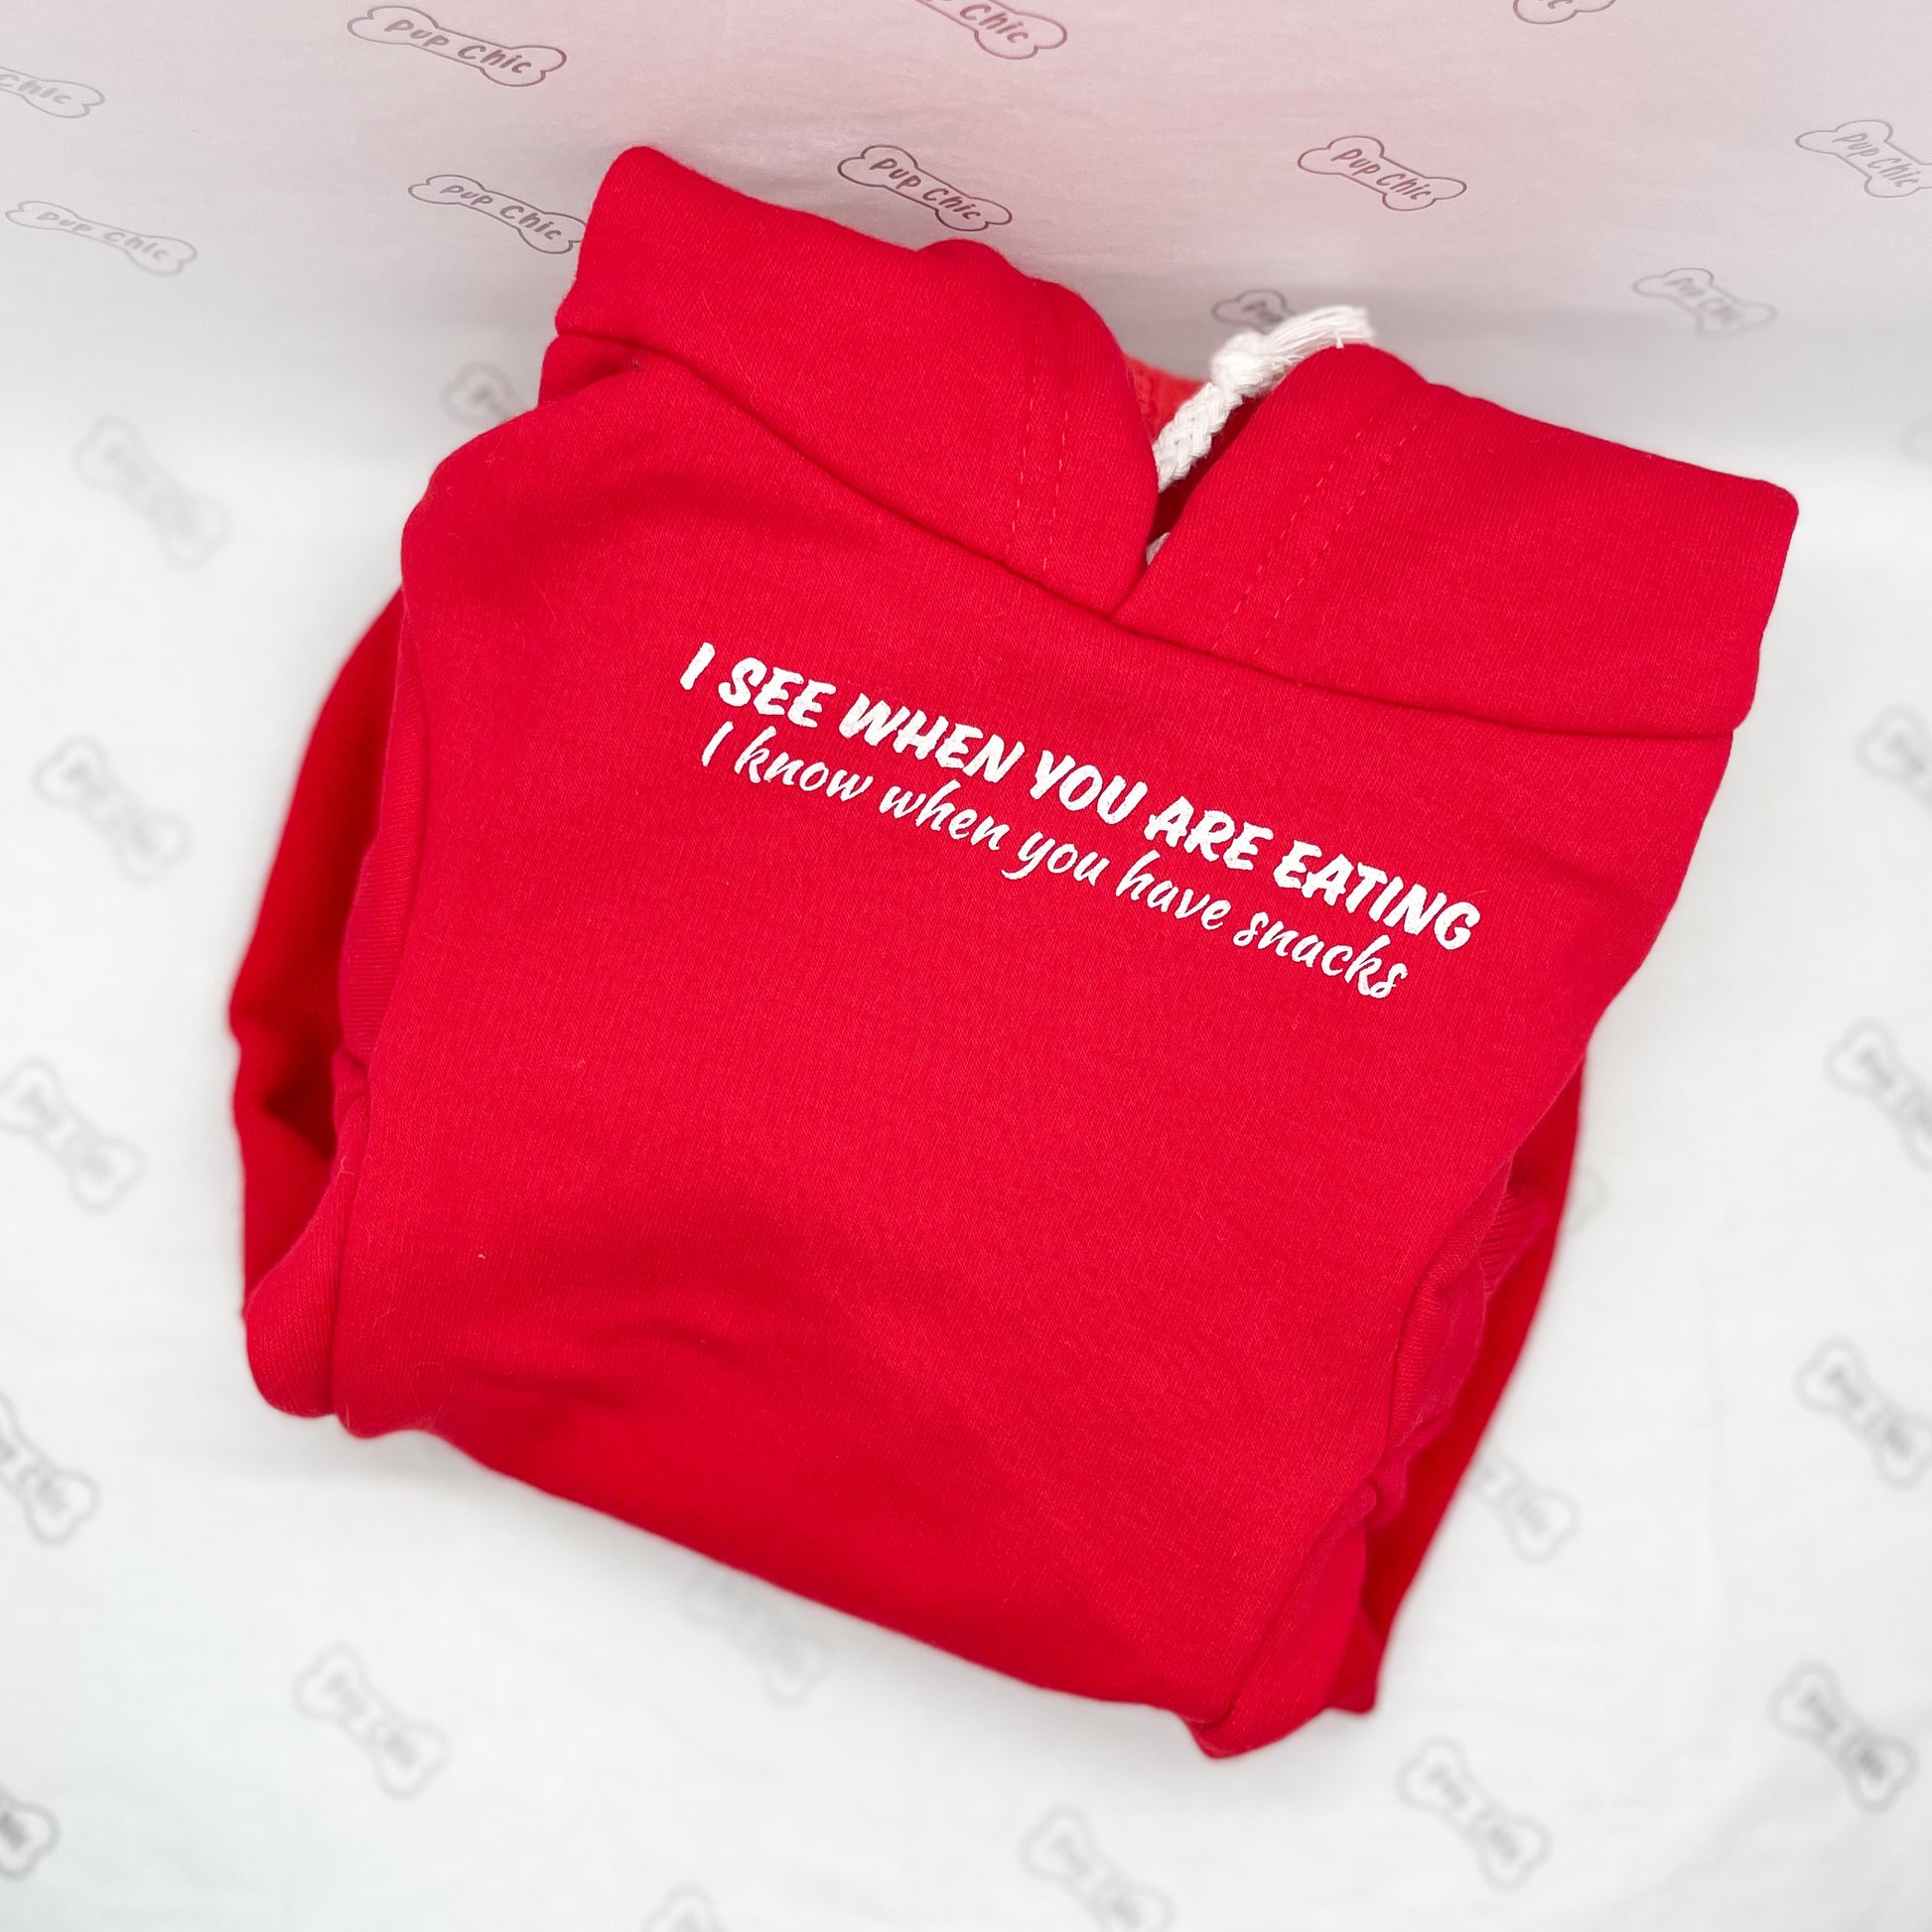 bespoke dog hoodie - red